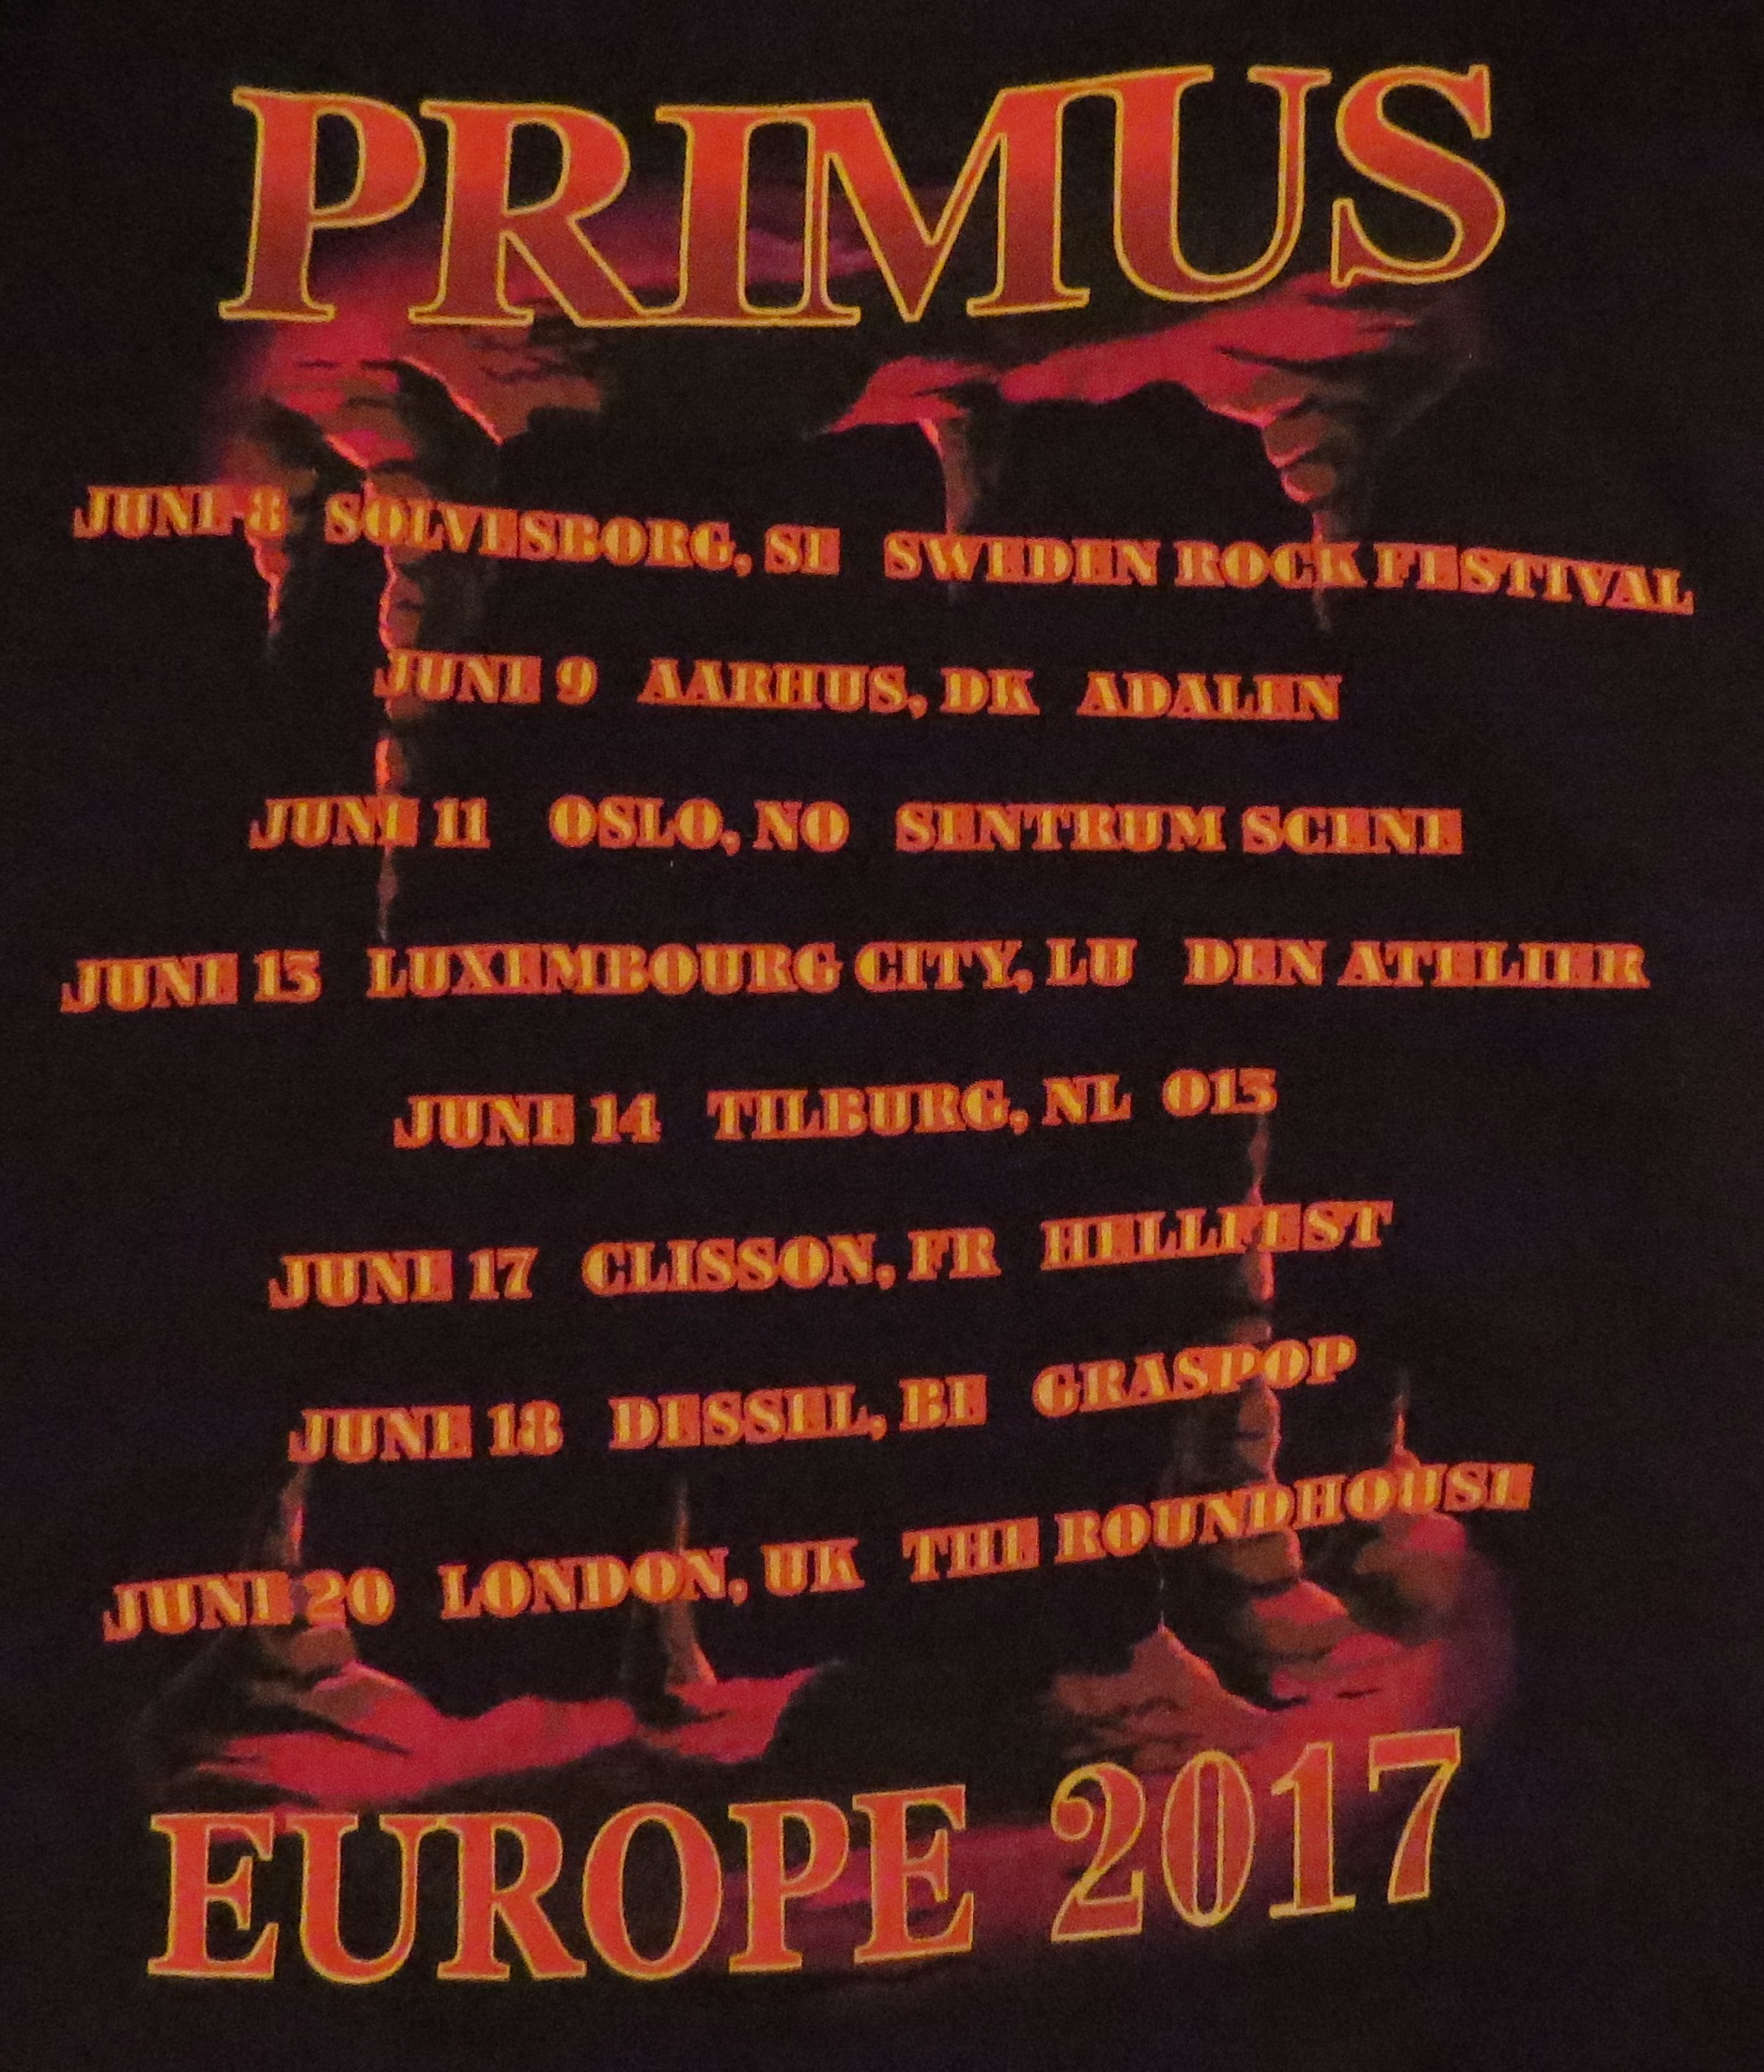 Primus2017-06-13DenAtelierLuxembourg (10).jpg